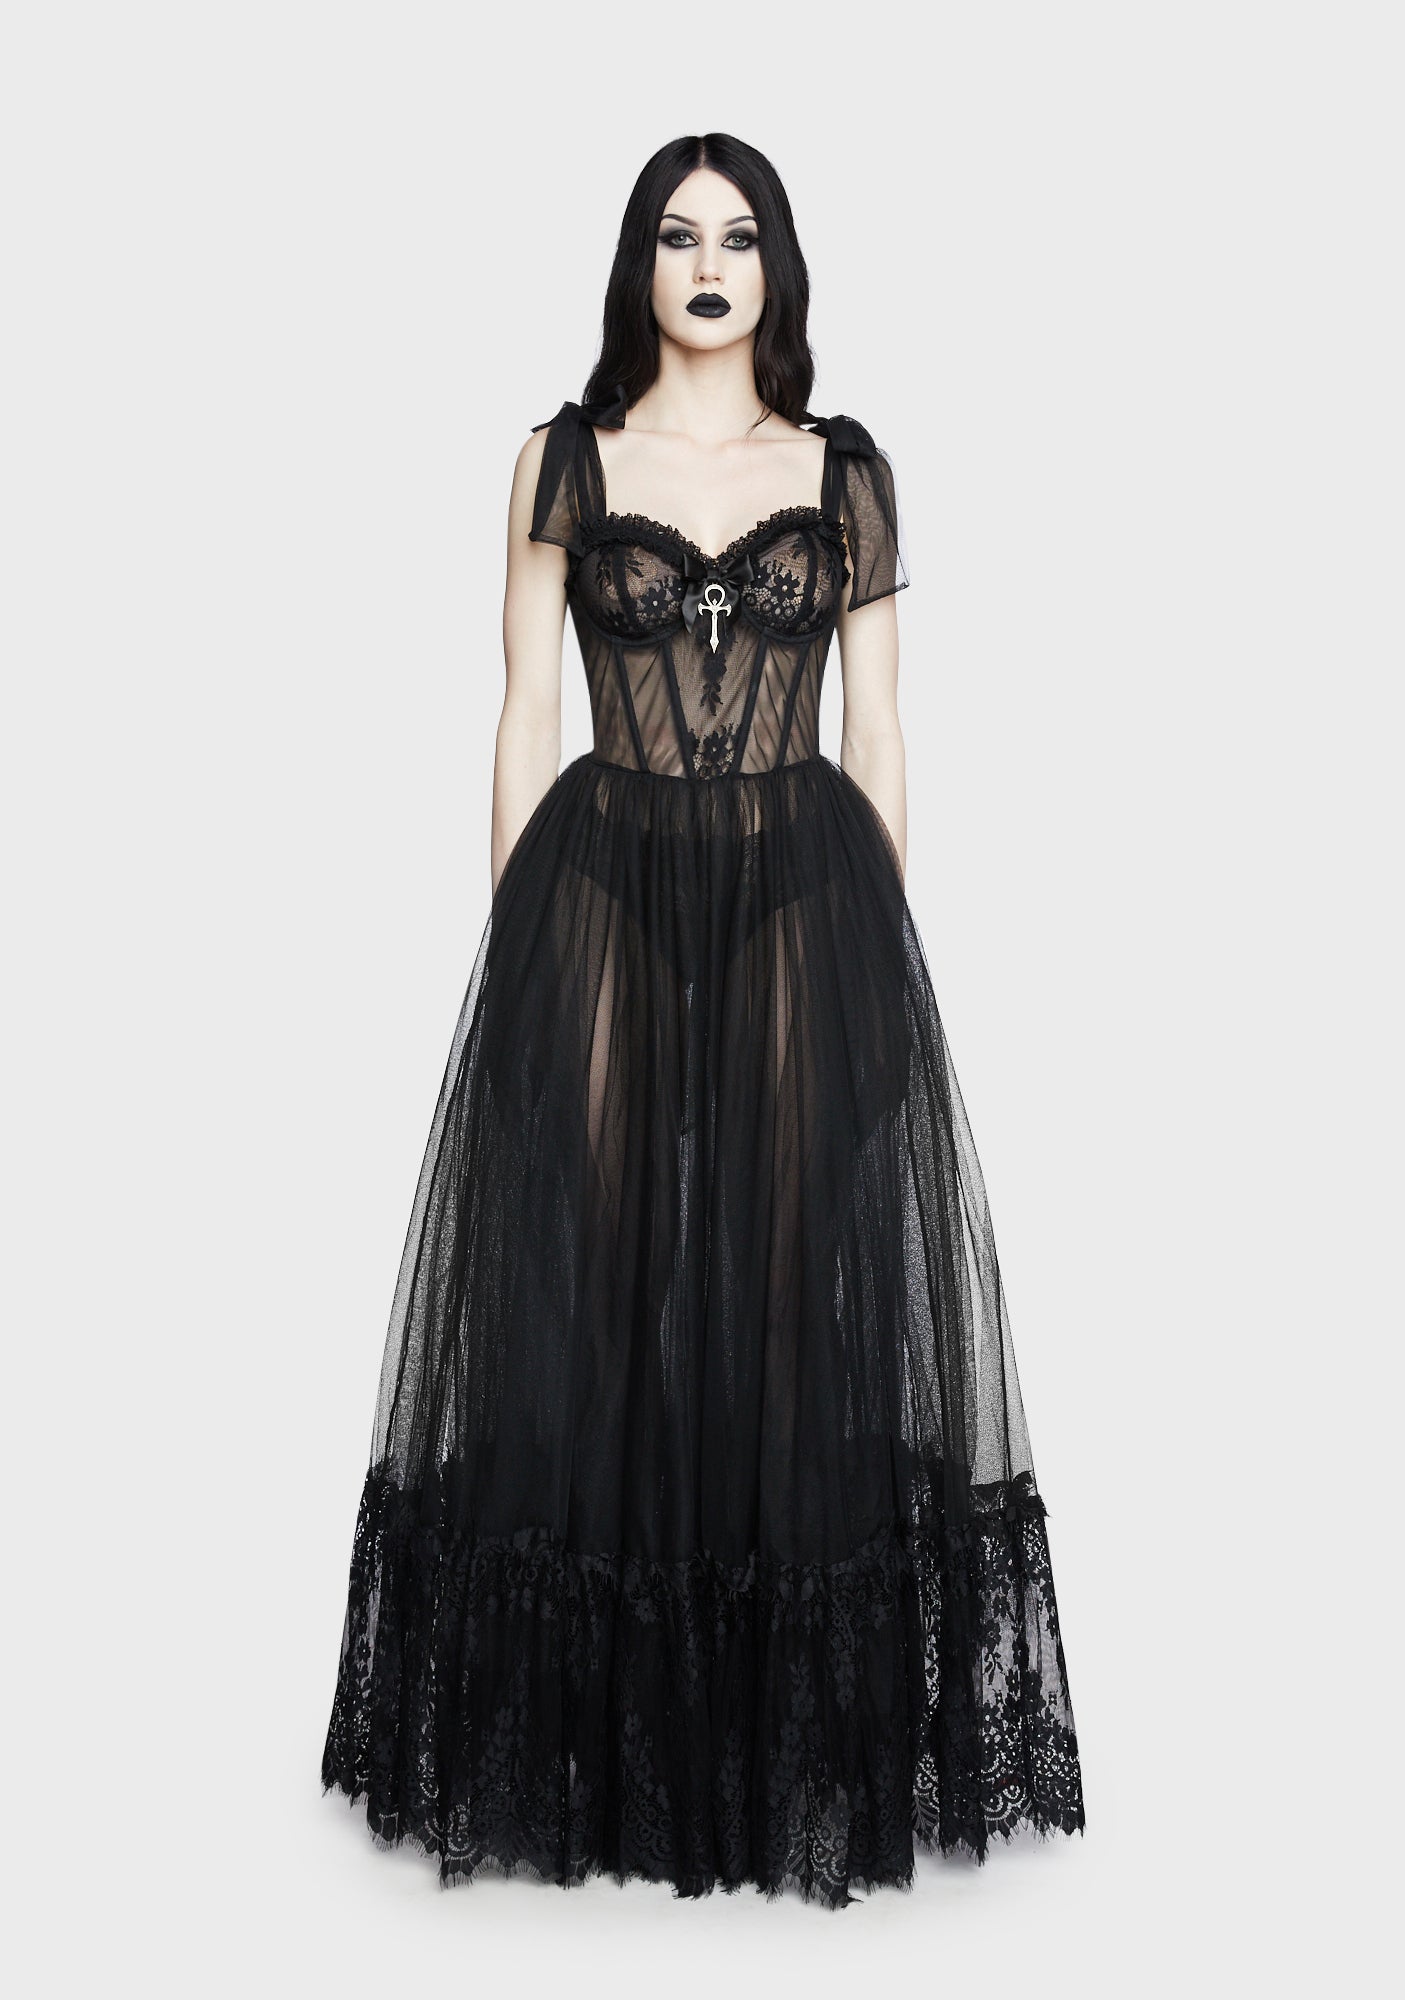 Colorful Corset Over Sheer Black Dress – Tokyo Fashion